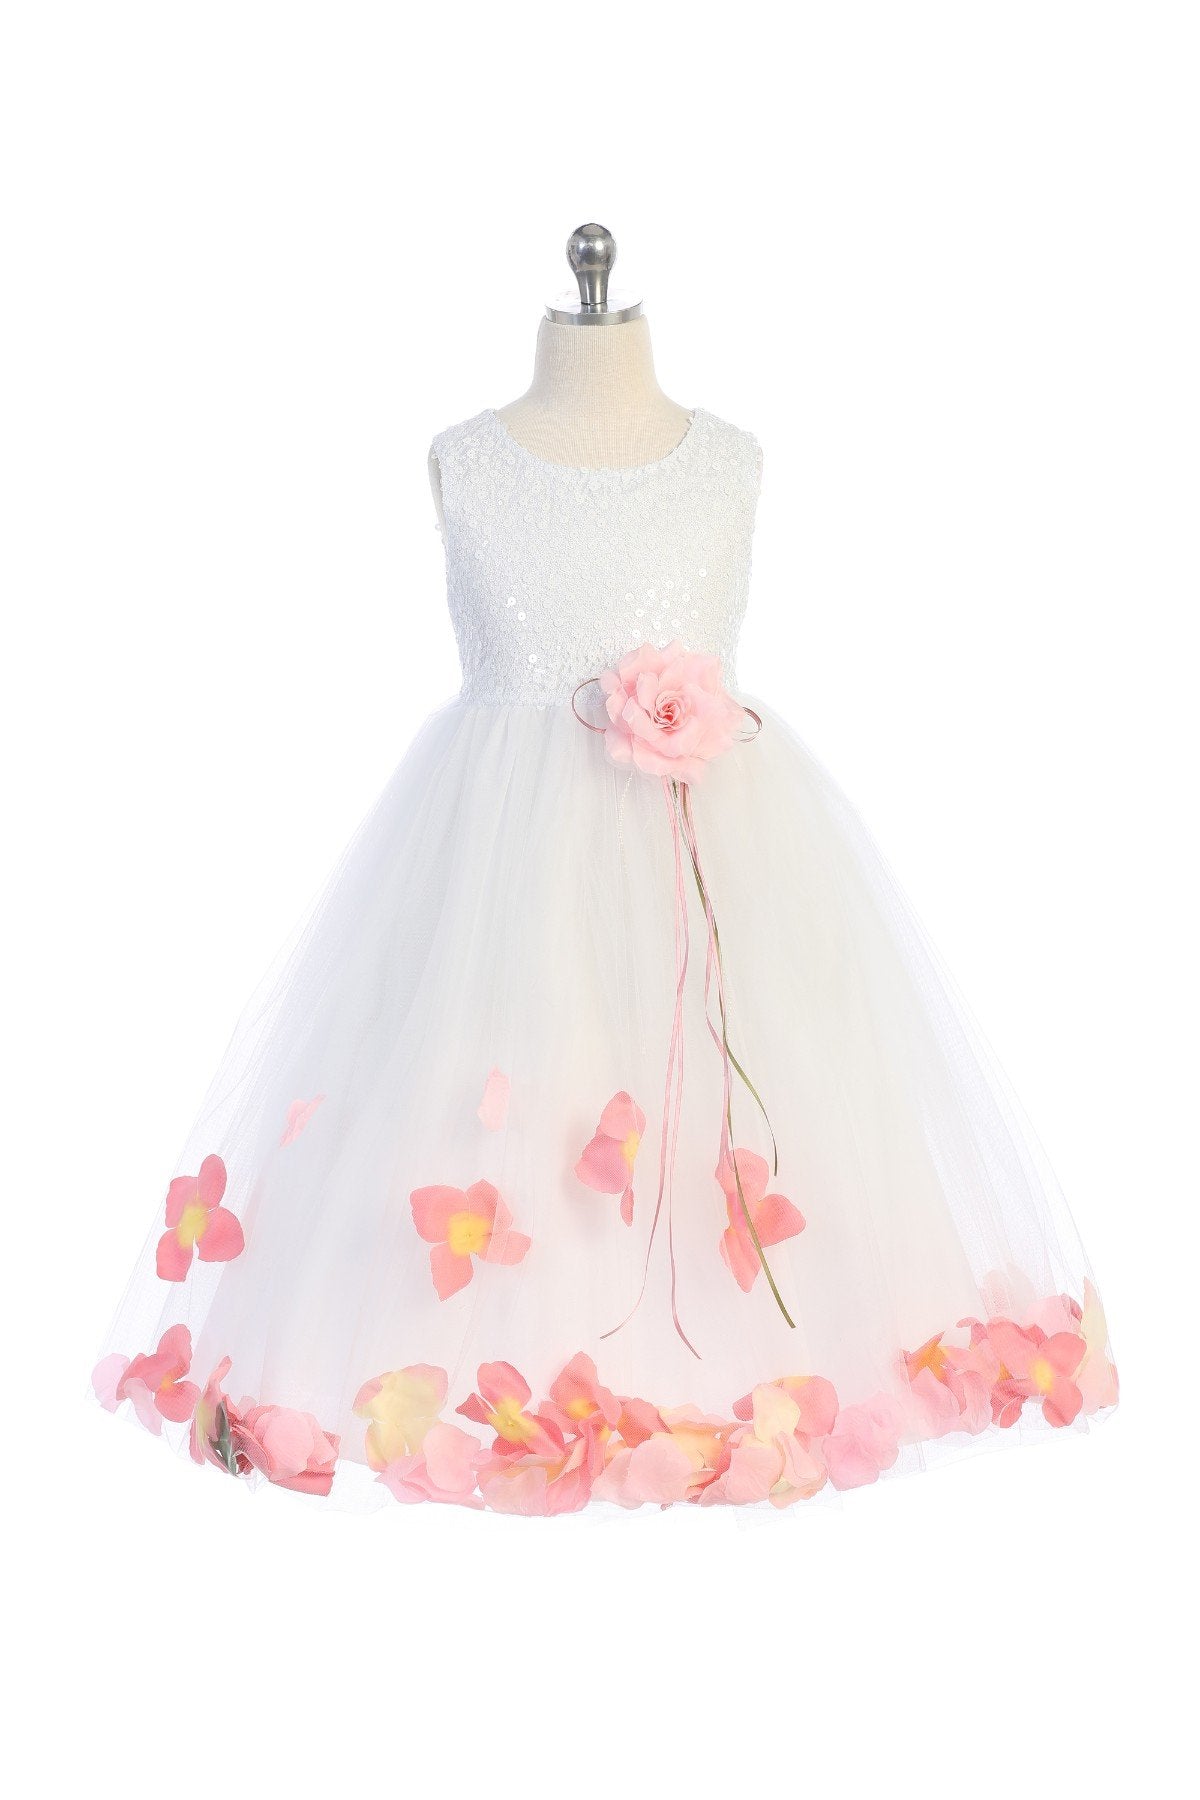 Dress - Sequin Top Petal Dress (1of2)